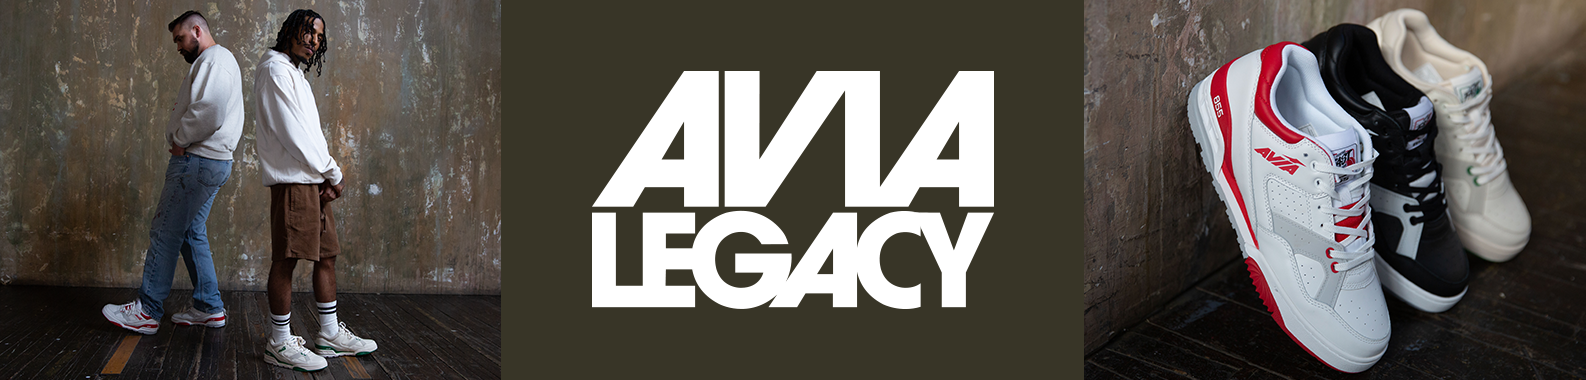 Avia Legacy brand header image